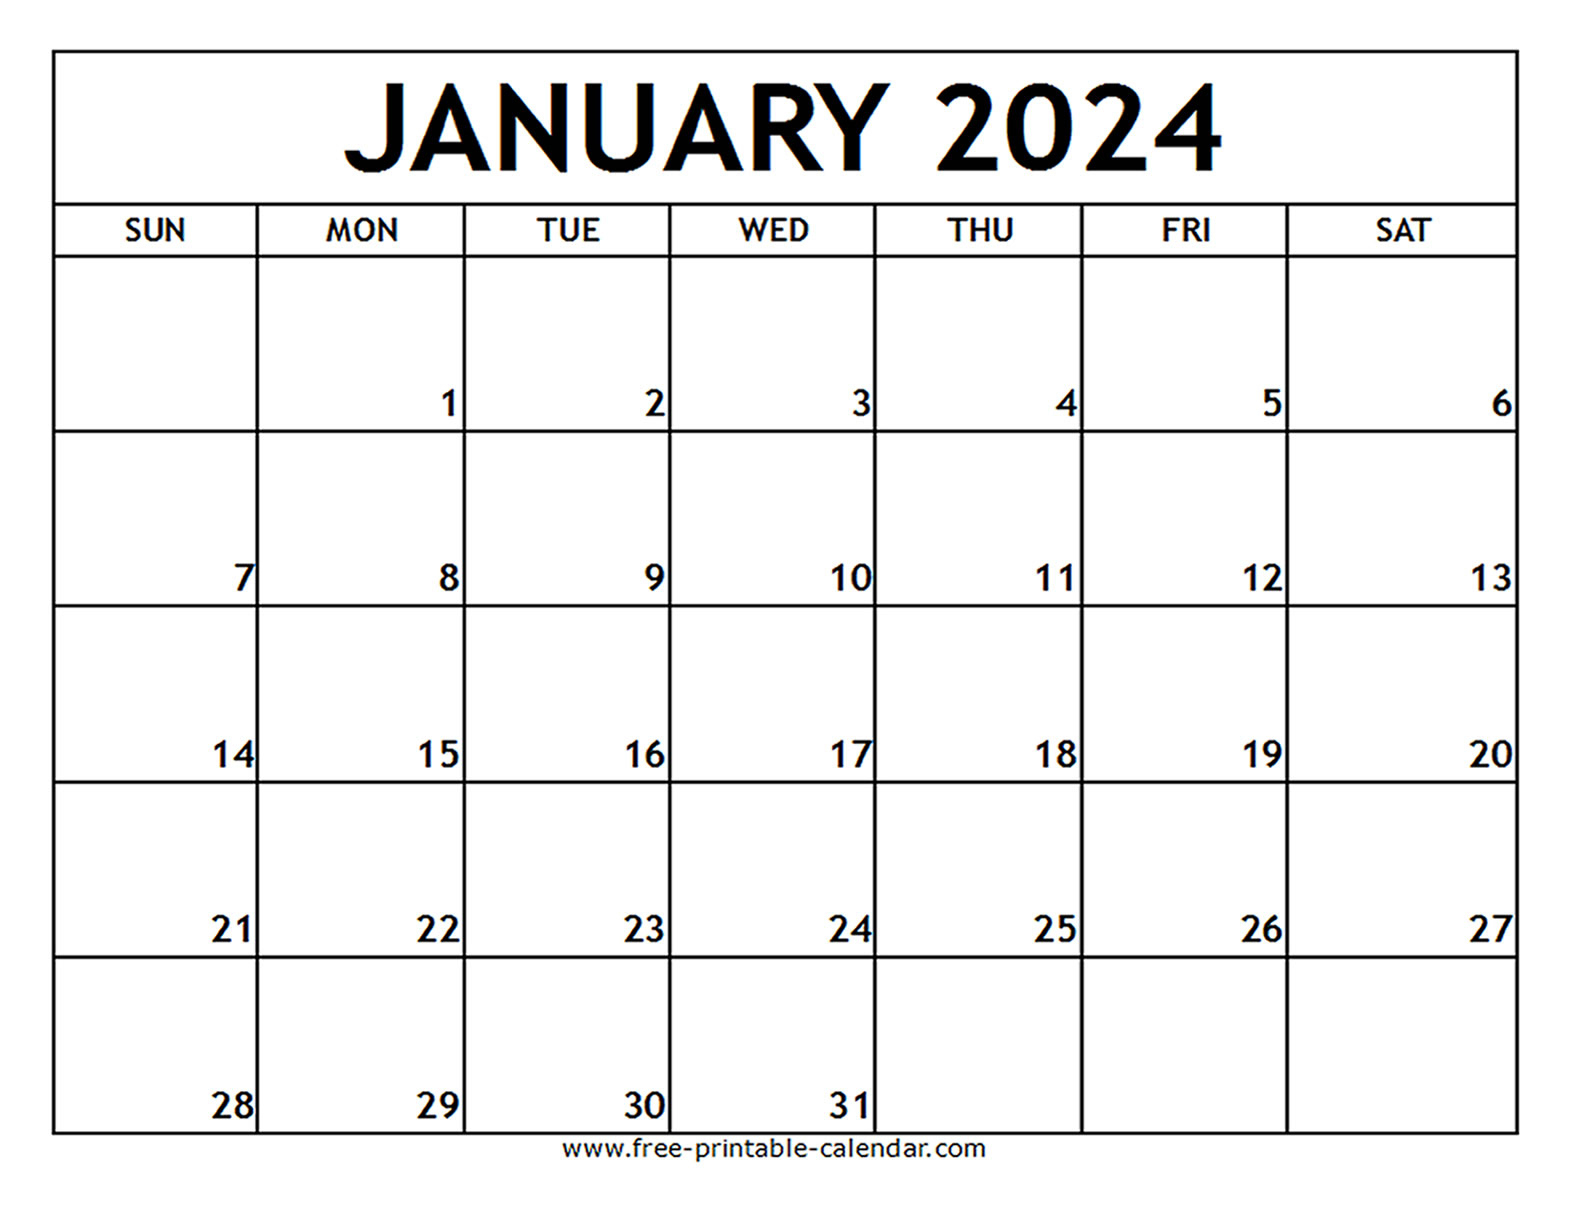 January 2024 Printable Calendar - Free-Printable-Calendar | Calendar Template 2024 Free